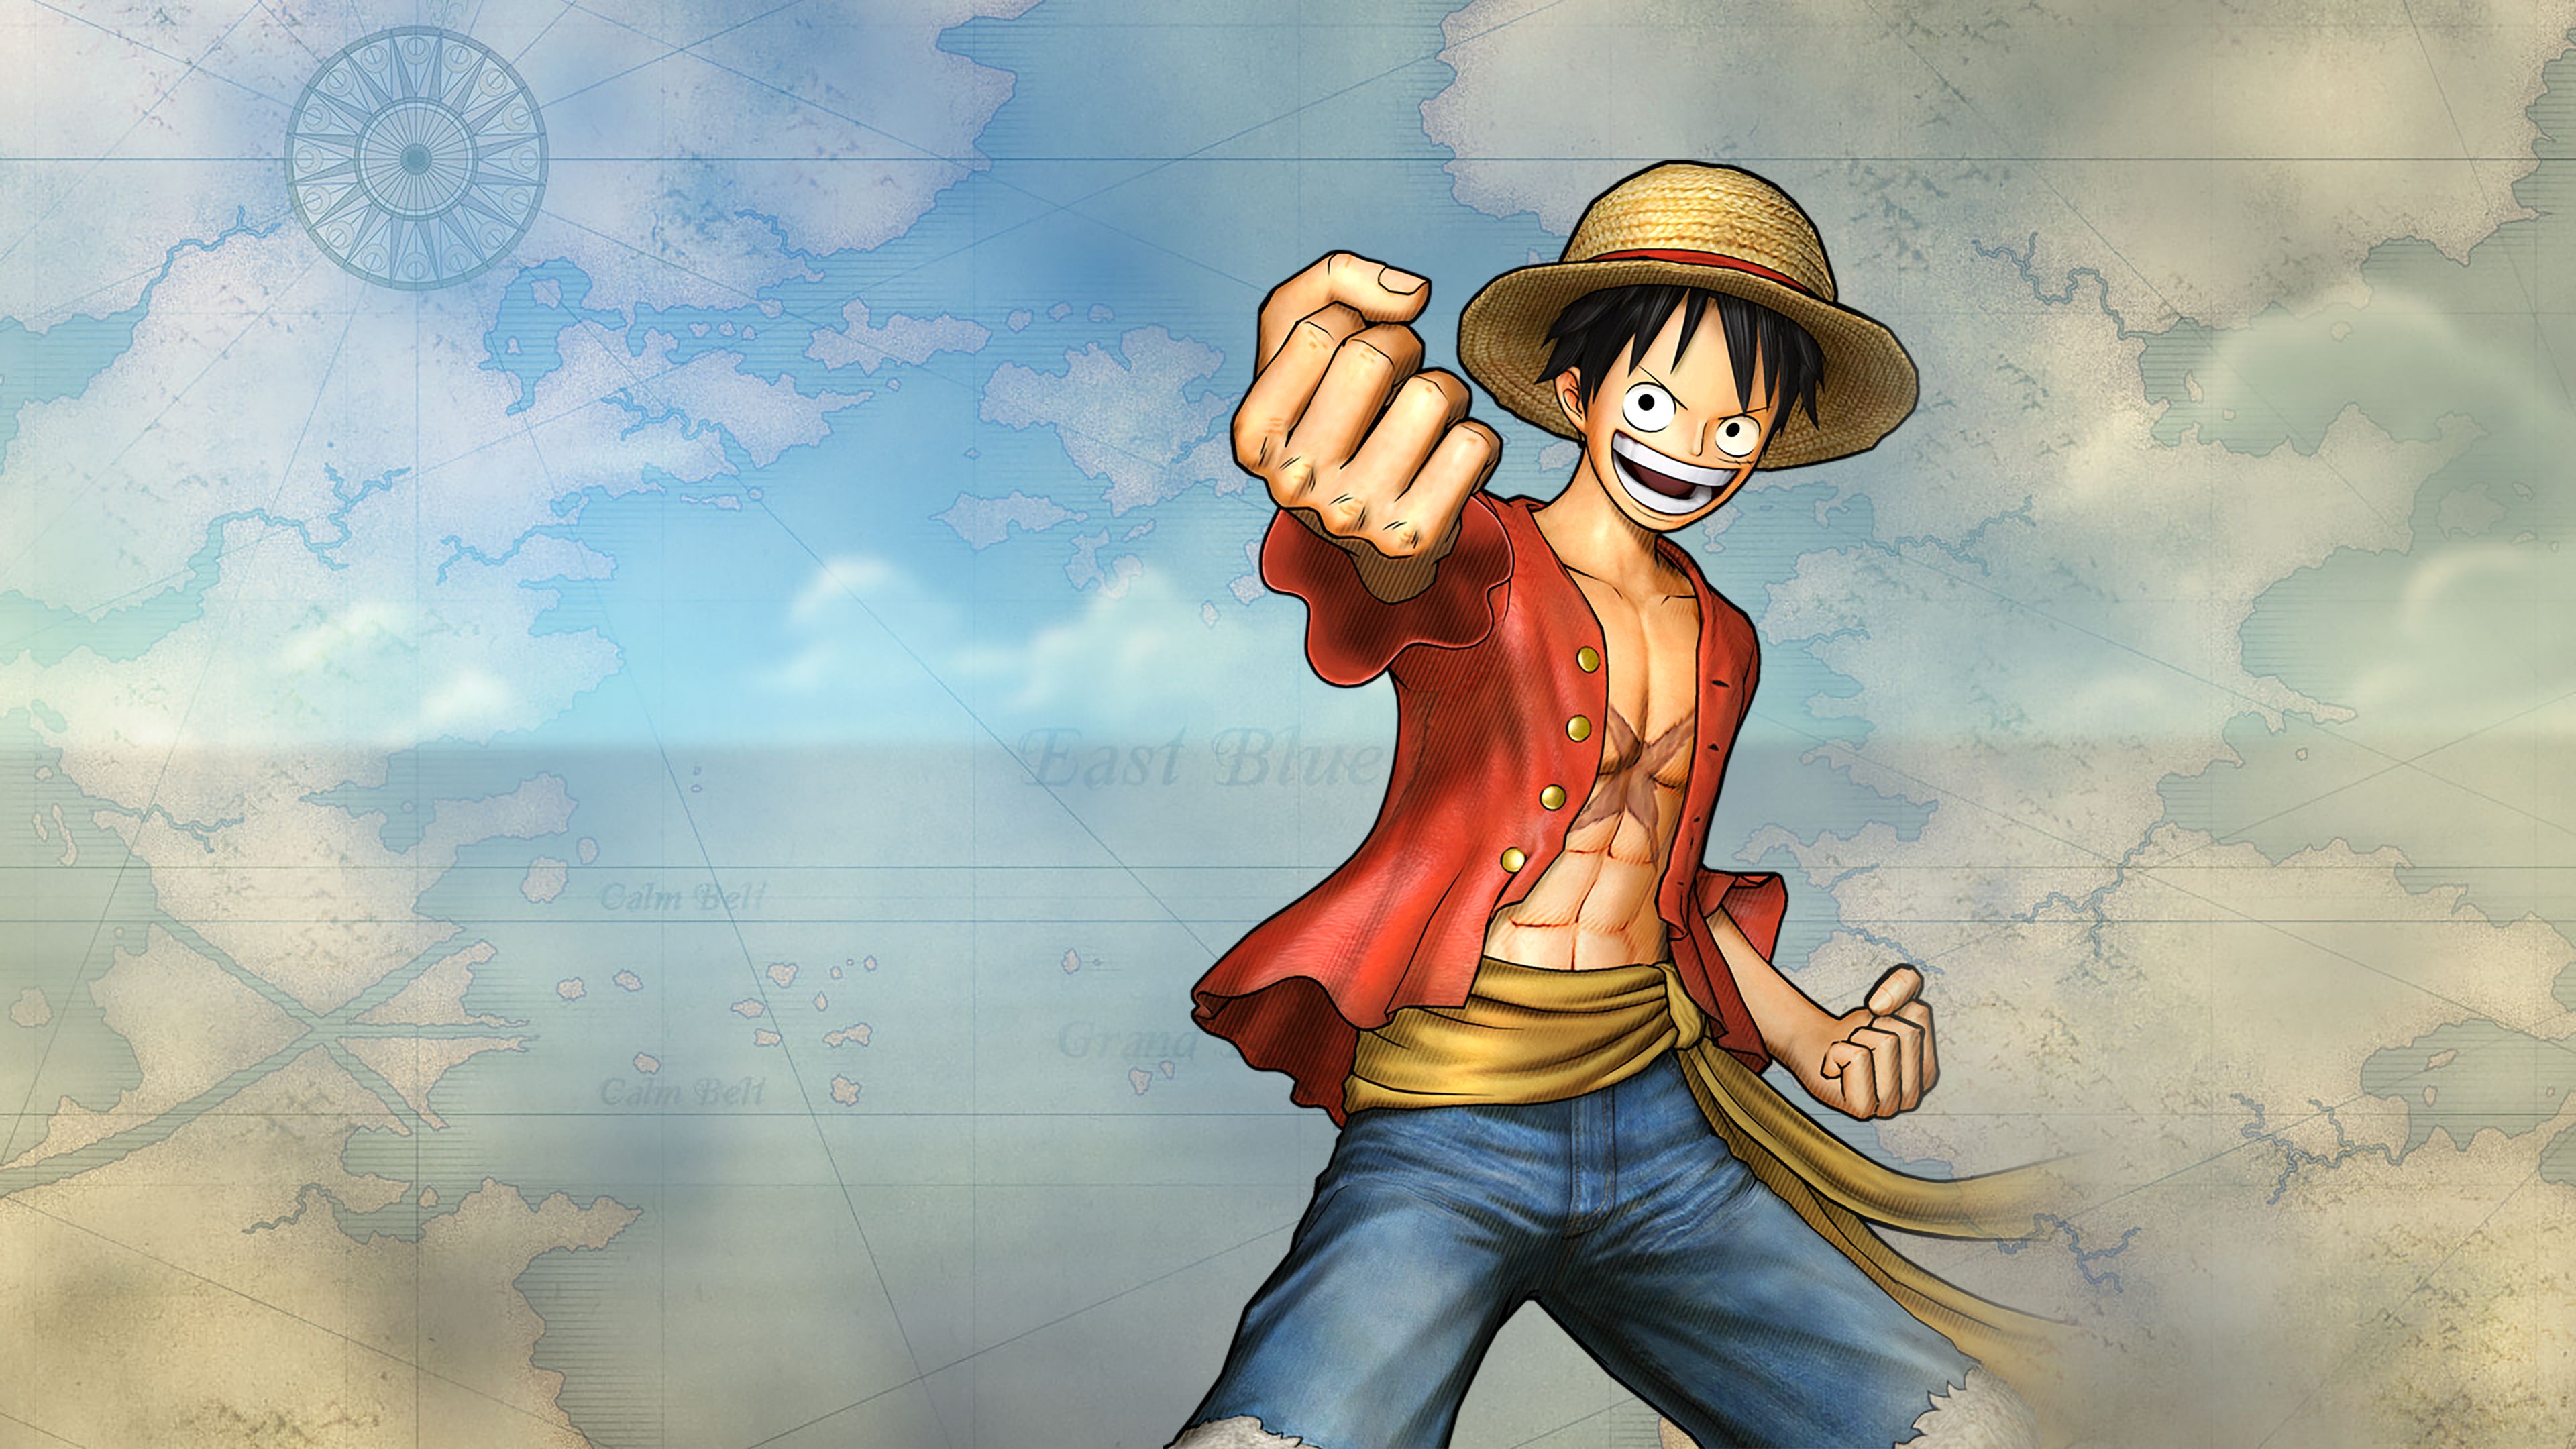 One Piece: Pirate Warriors 3 (中文版)